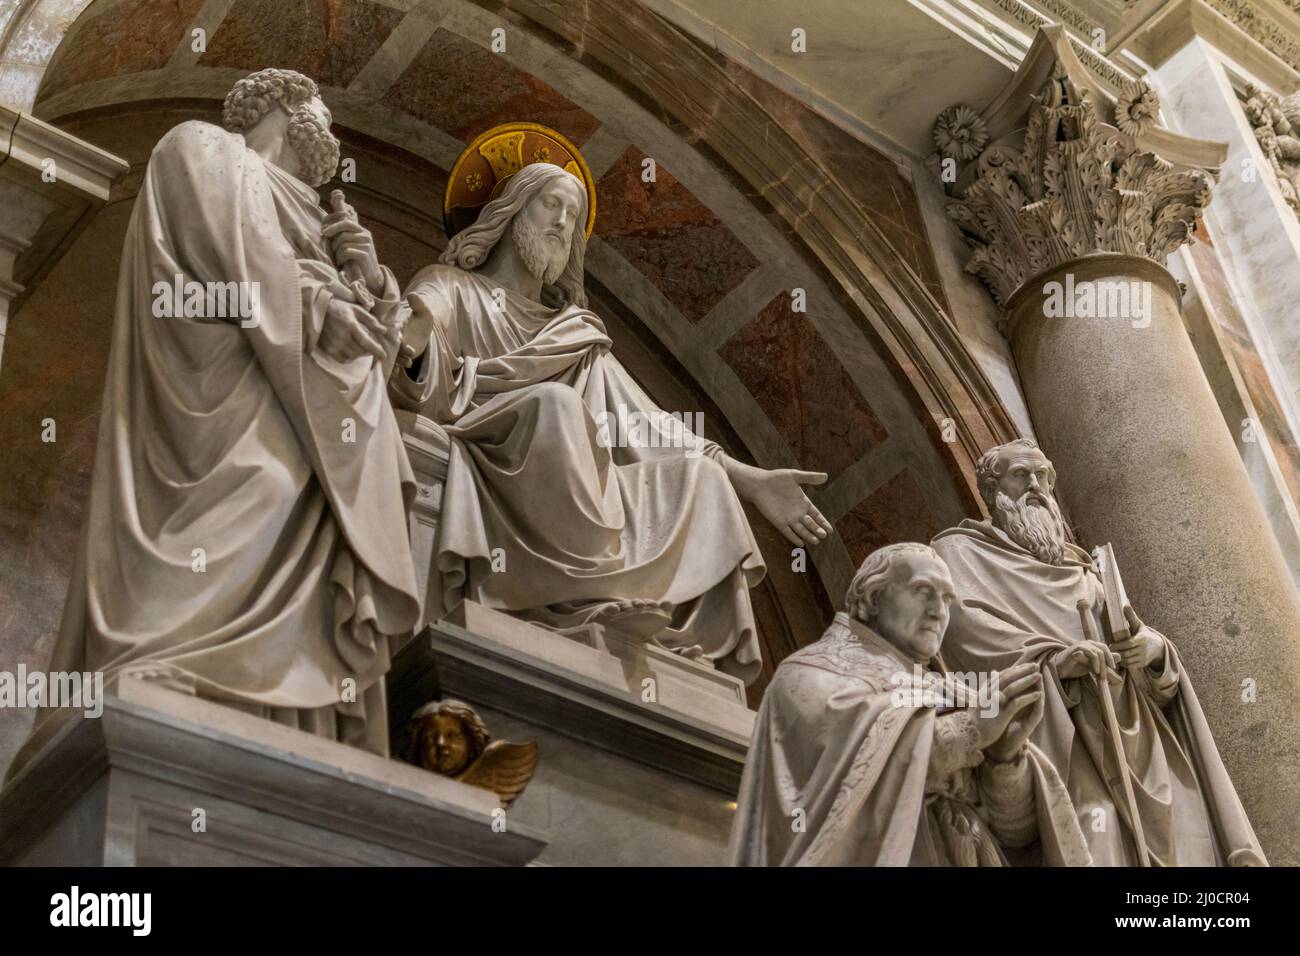 Sculptures Featuring Jesus, Saint Paul, Saint Peter and a Pope, St. Peter Basilica, Vatican, Italy Stock Photo